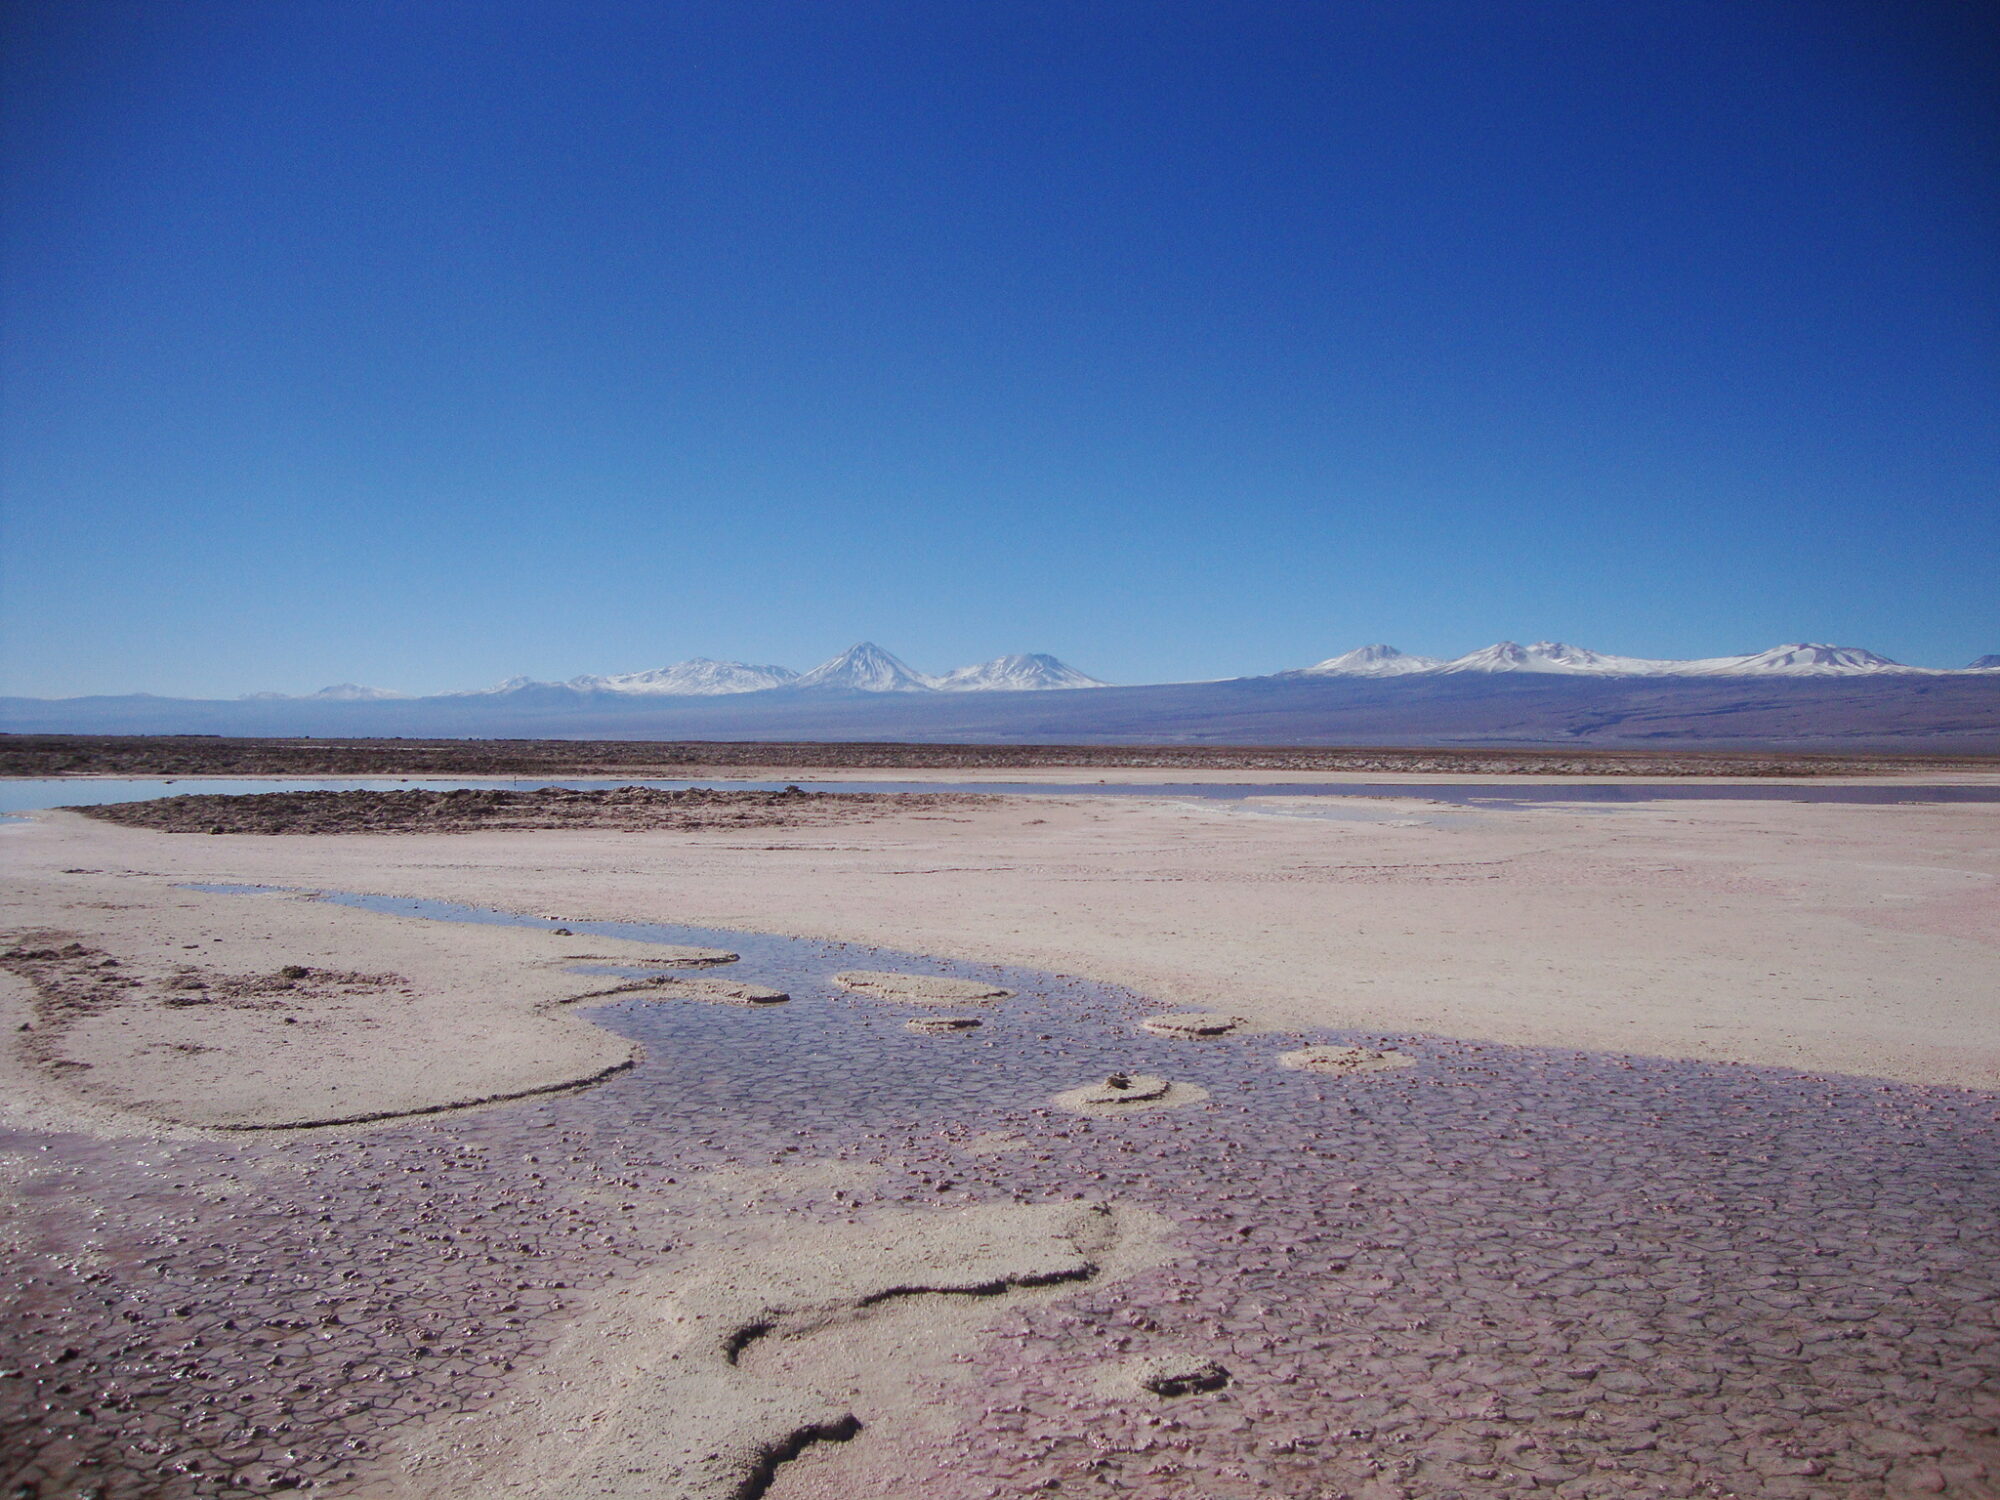 The Puilar lagoon in Chile's Atacama Desert